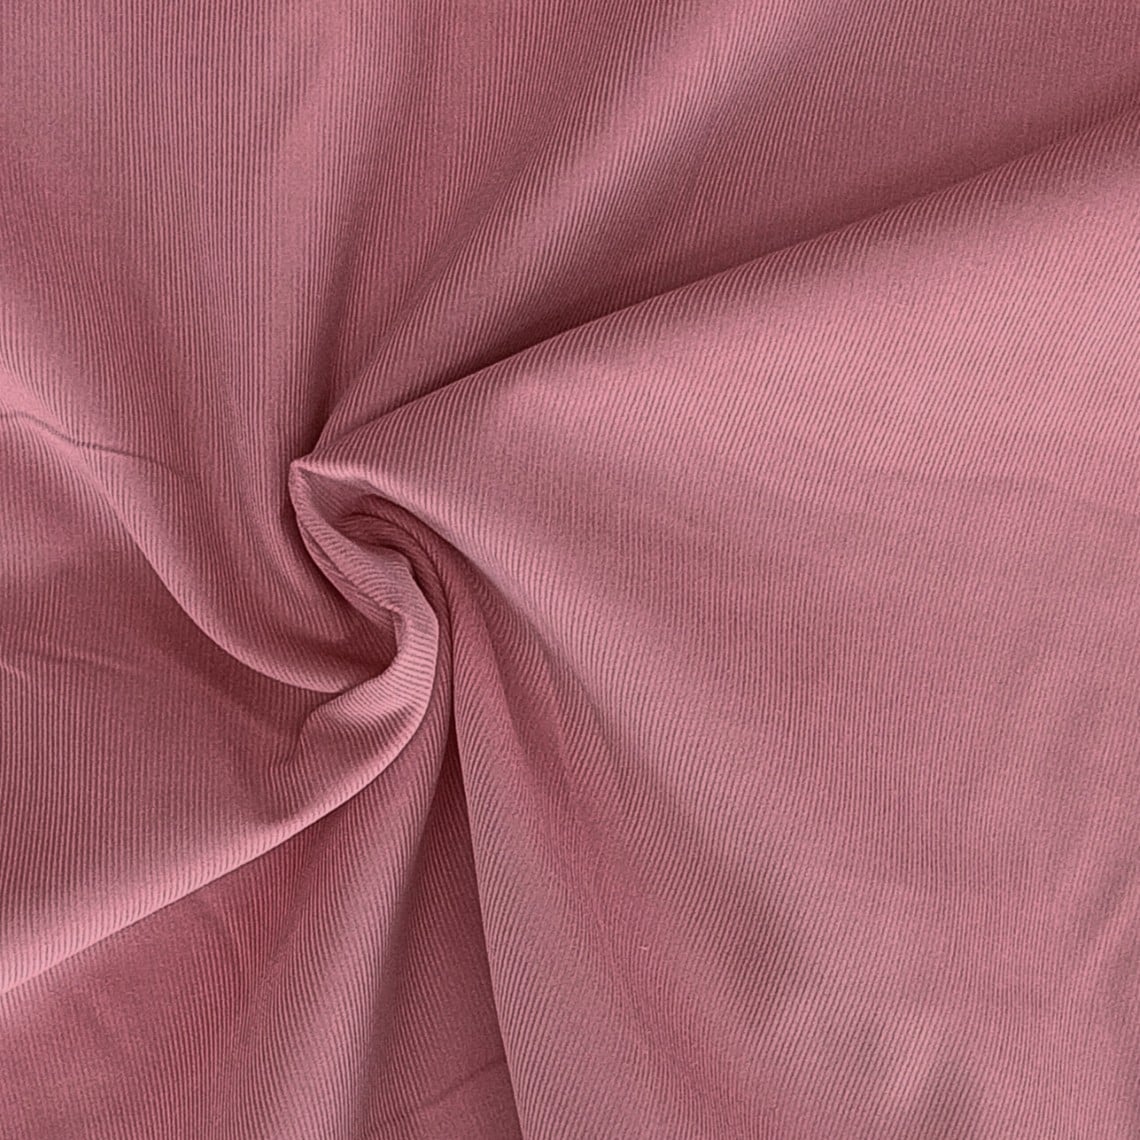 Babycord rose pink corduroy fabric | More Sewing